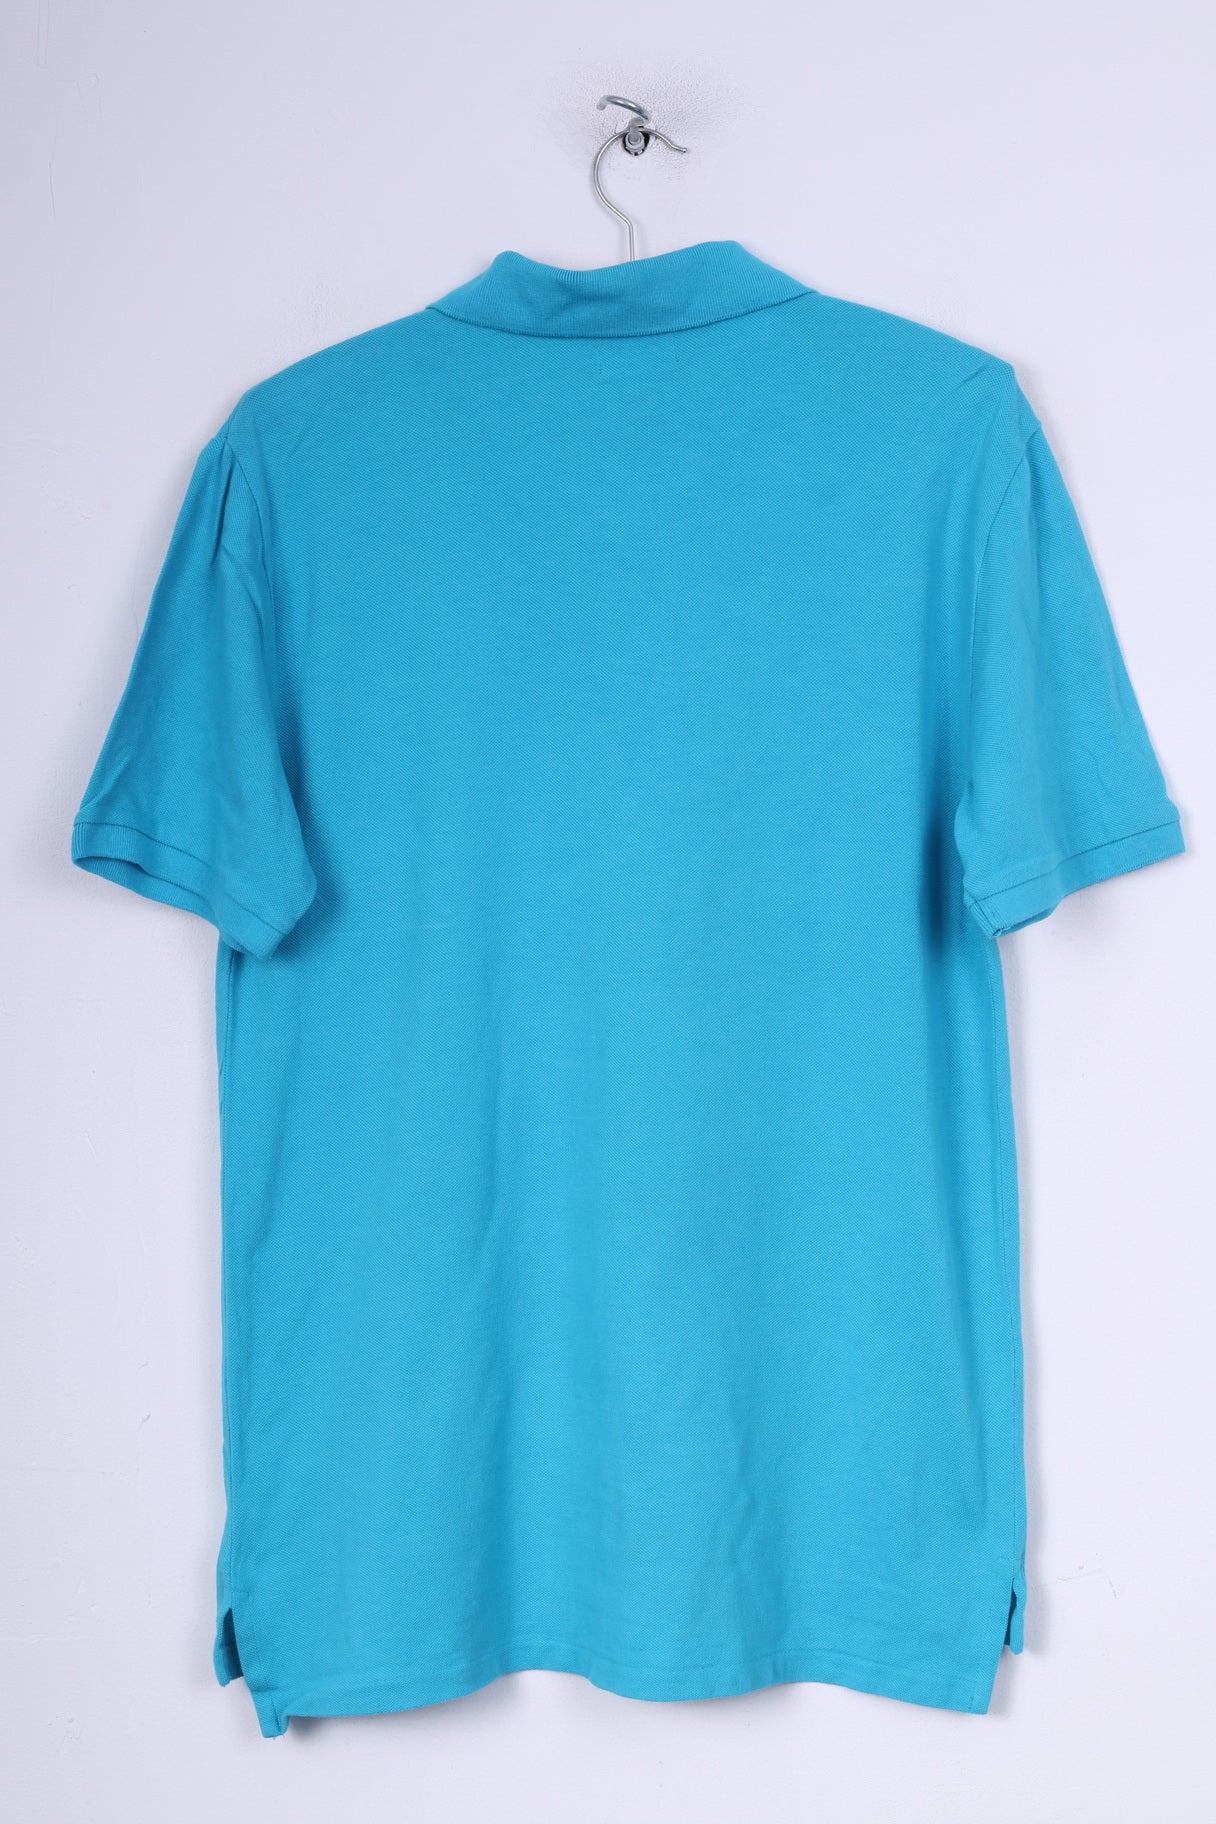 Chaps Youth XL (18-20) Polo Shirt Blue Short Sleeve Summer Cotton